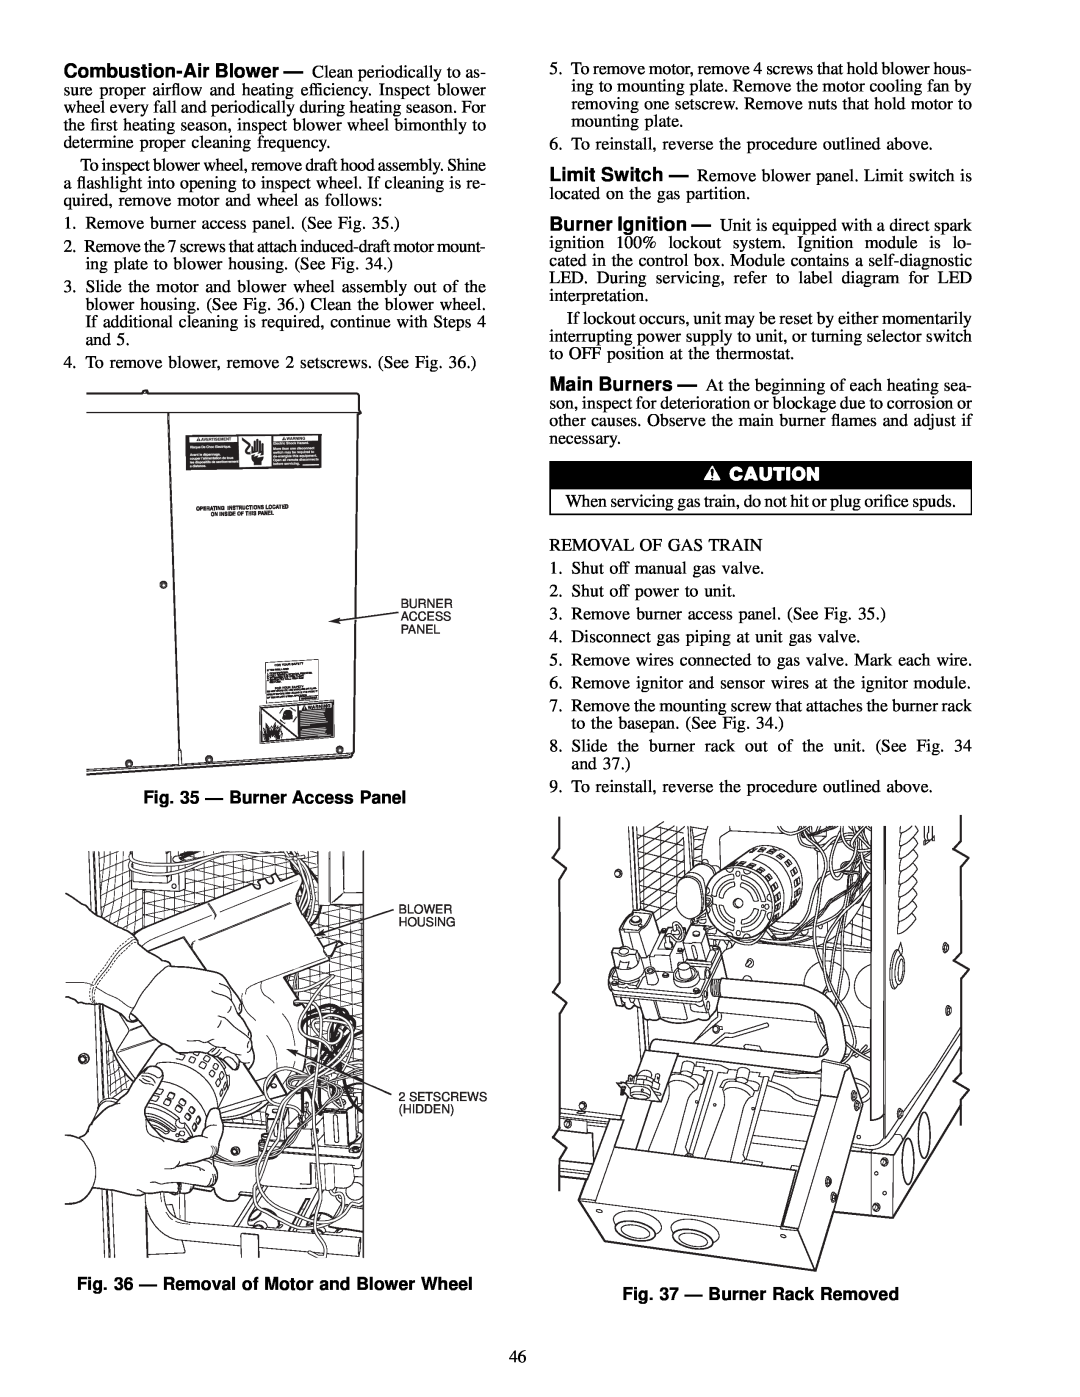 Carrier 48SS018-060, 48SX024-060 Ð Burner Access Panel, Ð Removal of Motor and Blower Wheel, Ð Burner Rack Removed 